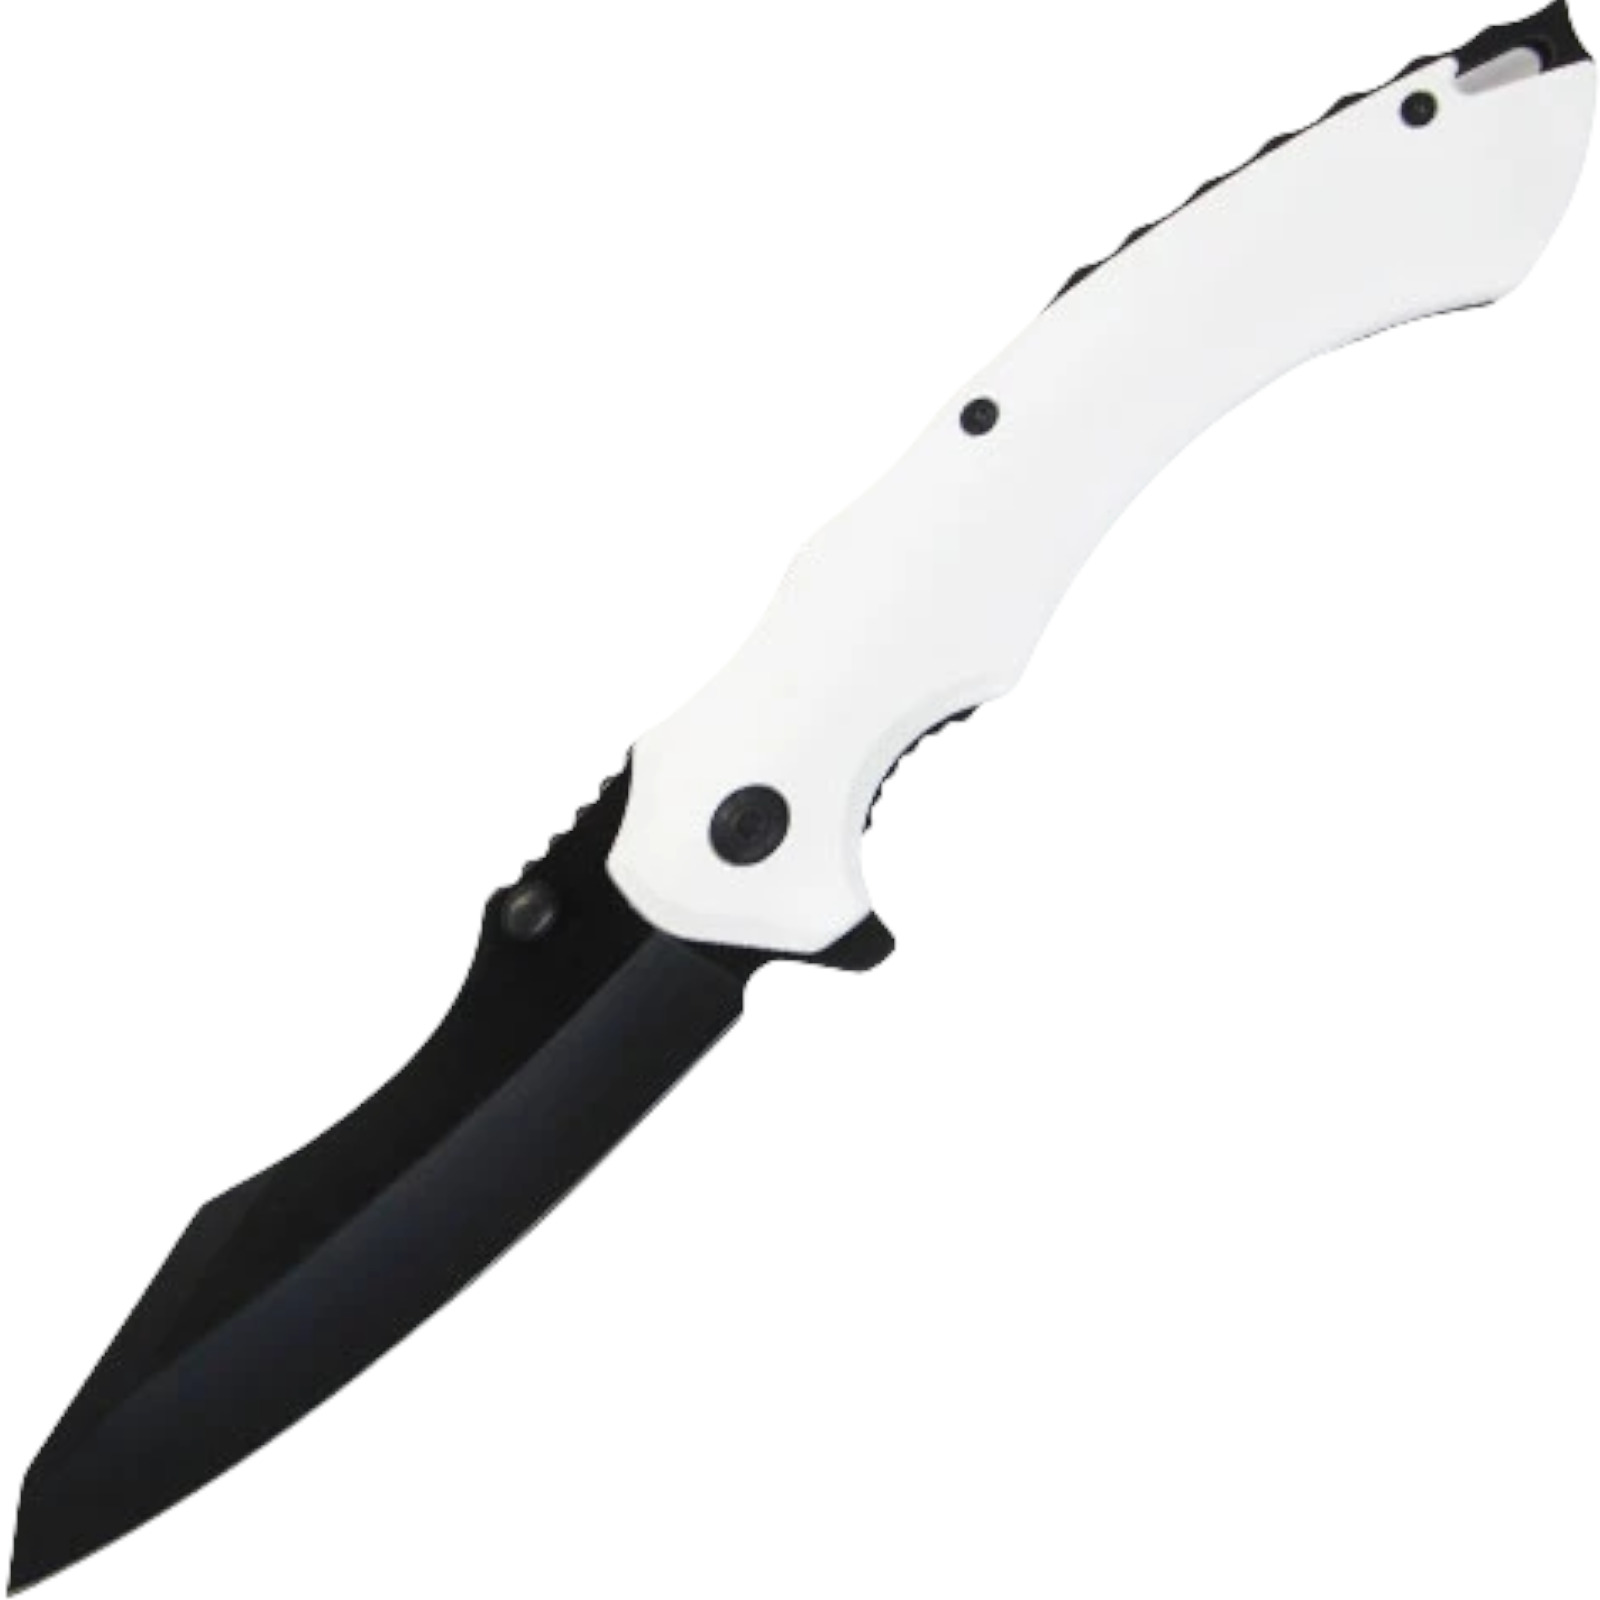 TACTICAL Spring Assisted Open Pocket Knife CLEAVER RAZOR FOLDING Blade White